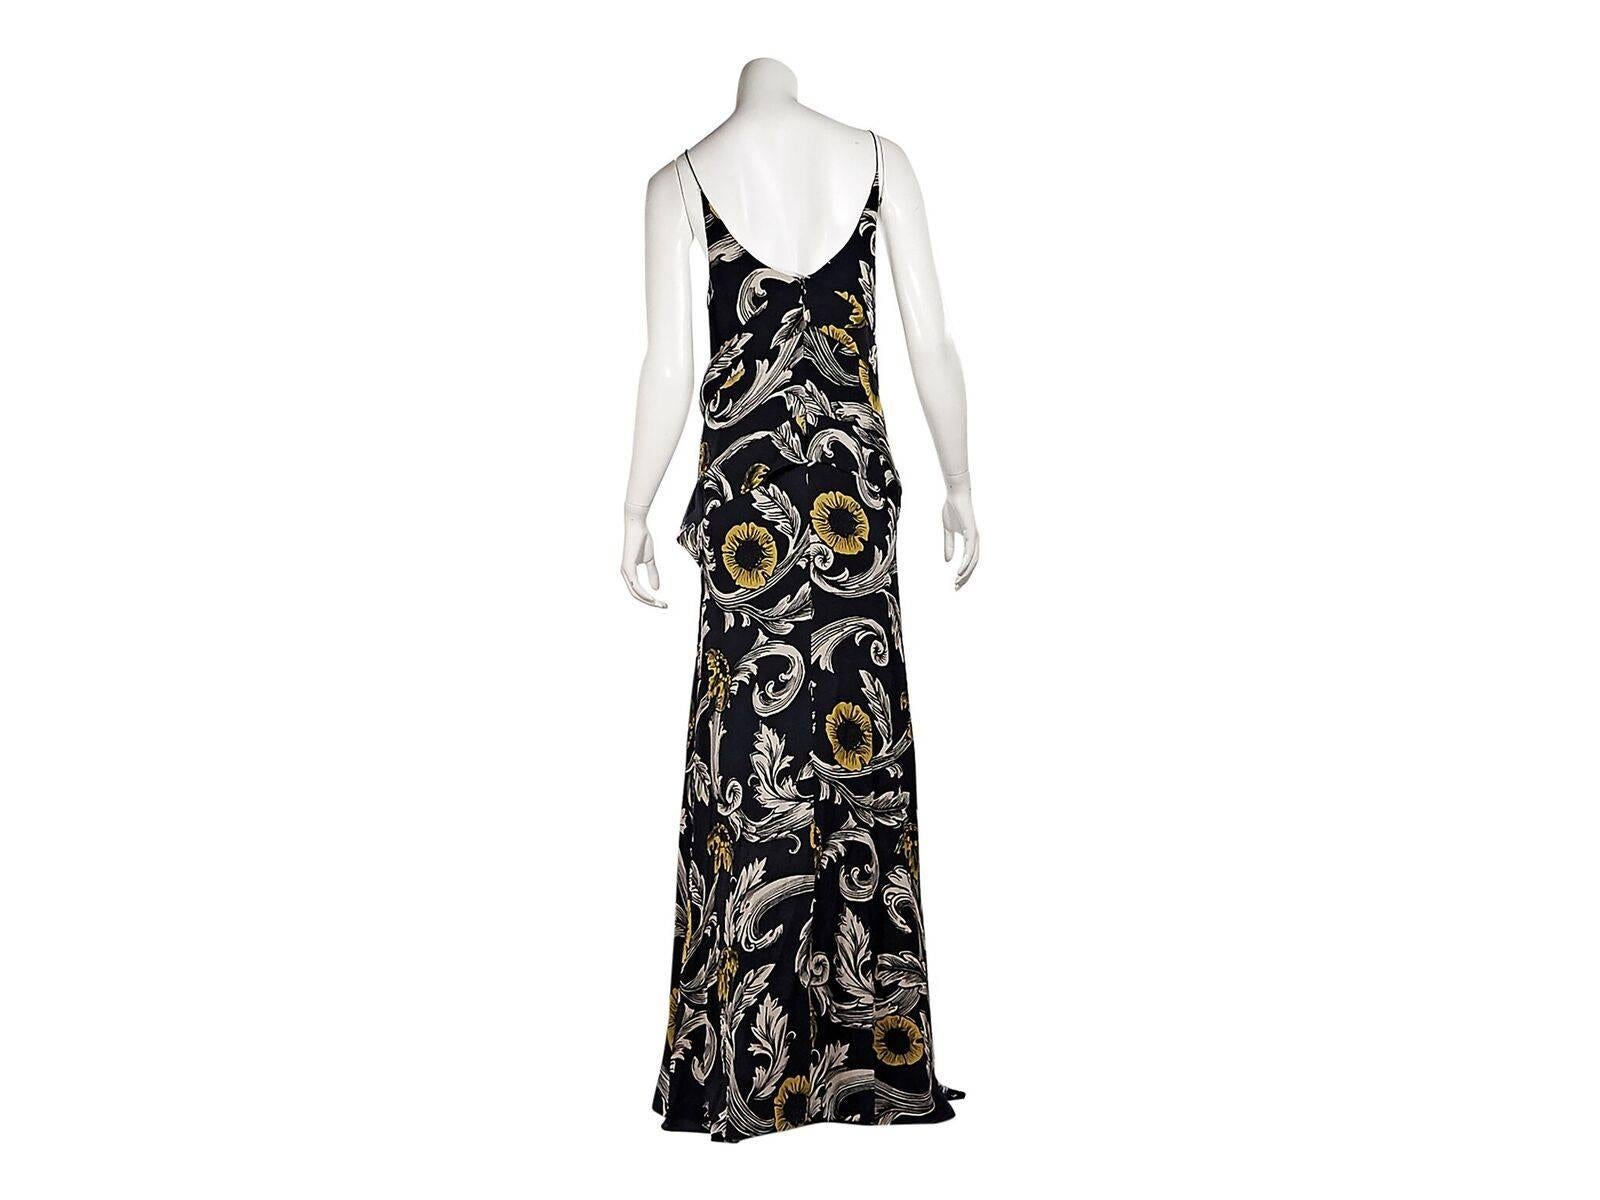 Black Burberry Prorsum Multicolor Floral-Printed Dress